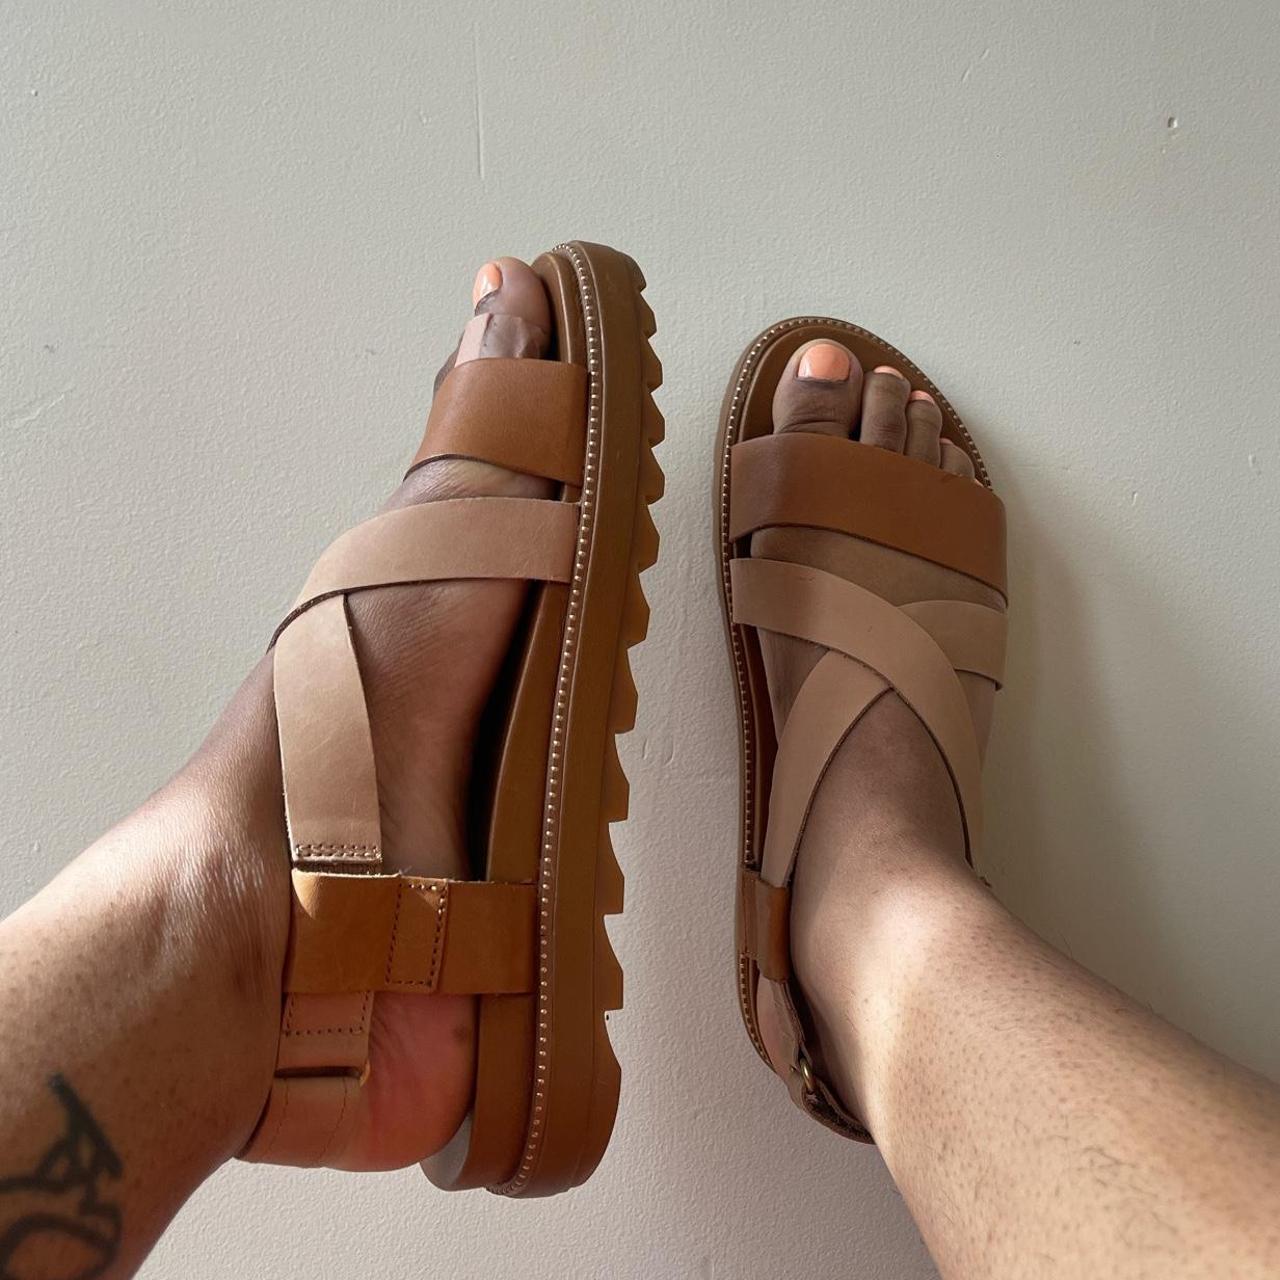 Sorel Women's Tan and Brown Sandals